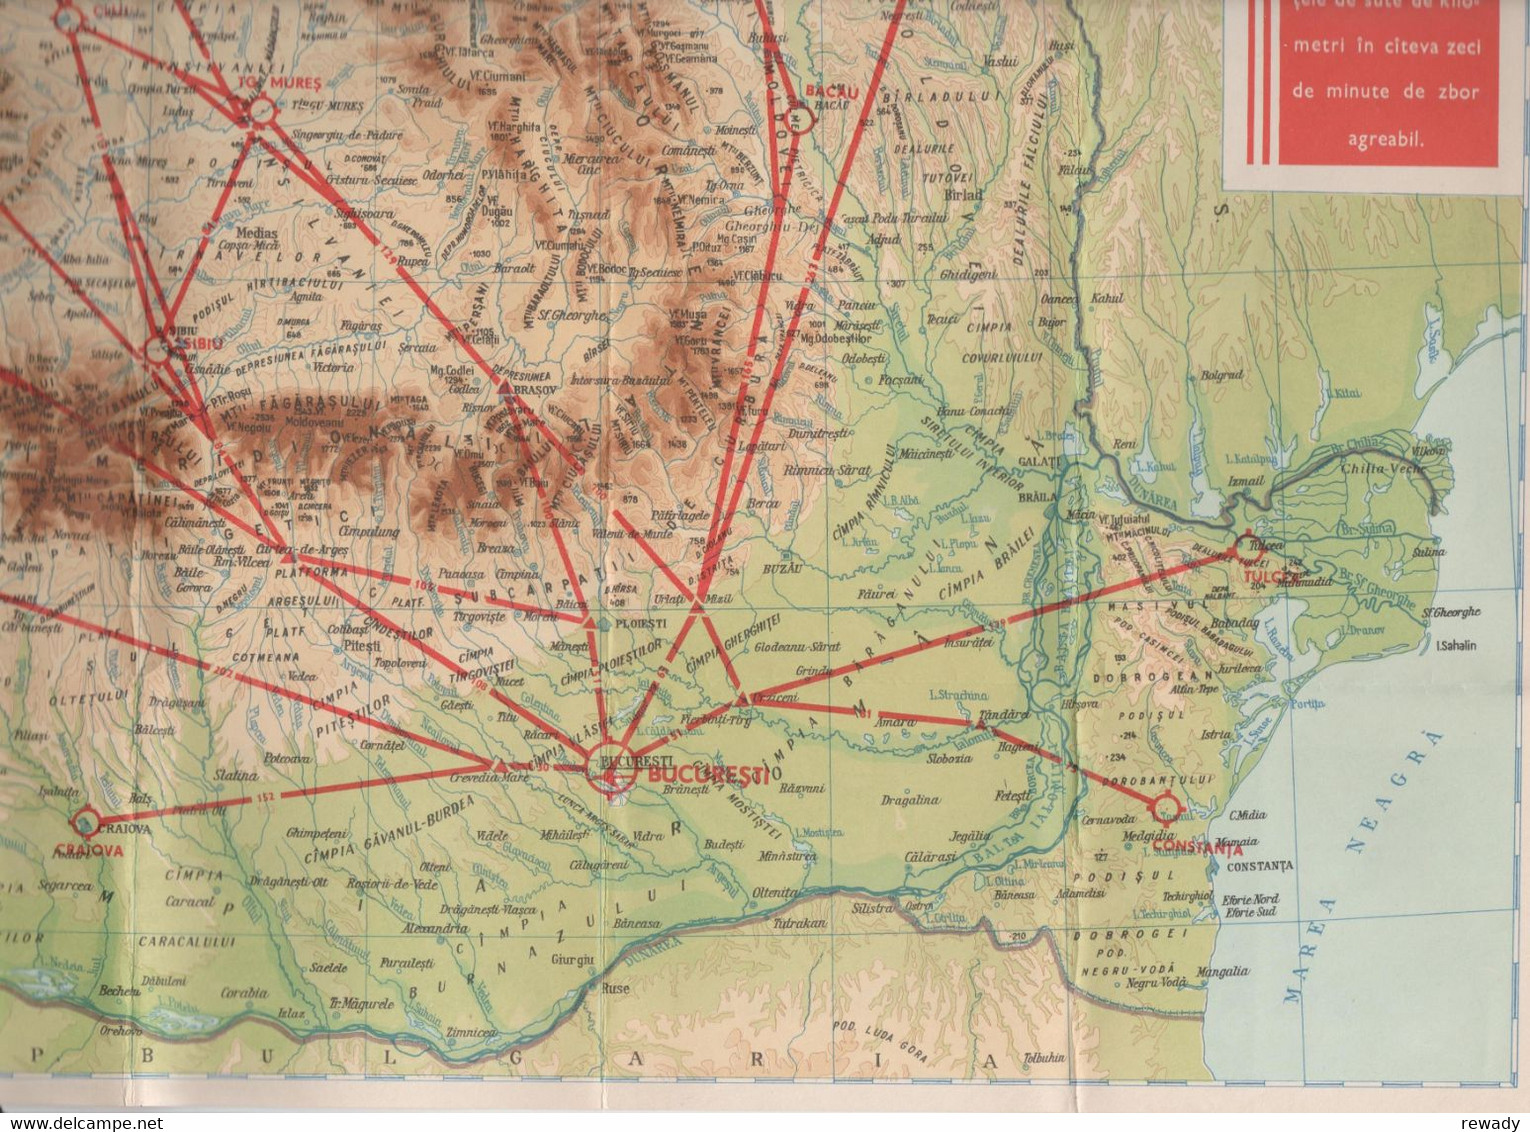 TAROM - Rute Interne / Vintage Flight Route Map / Agentii Romania - Vluchtmagazines